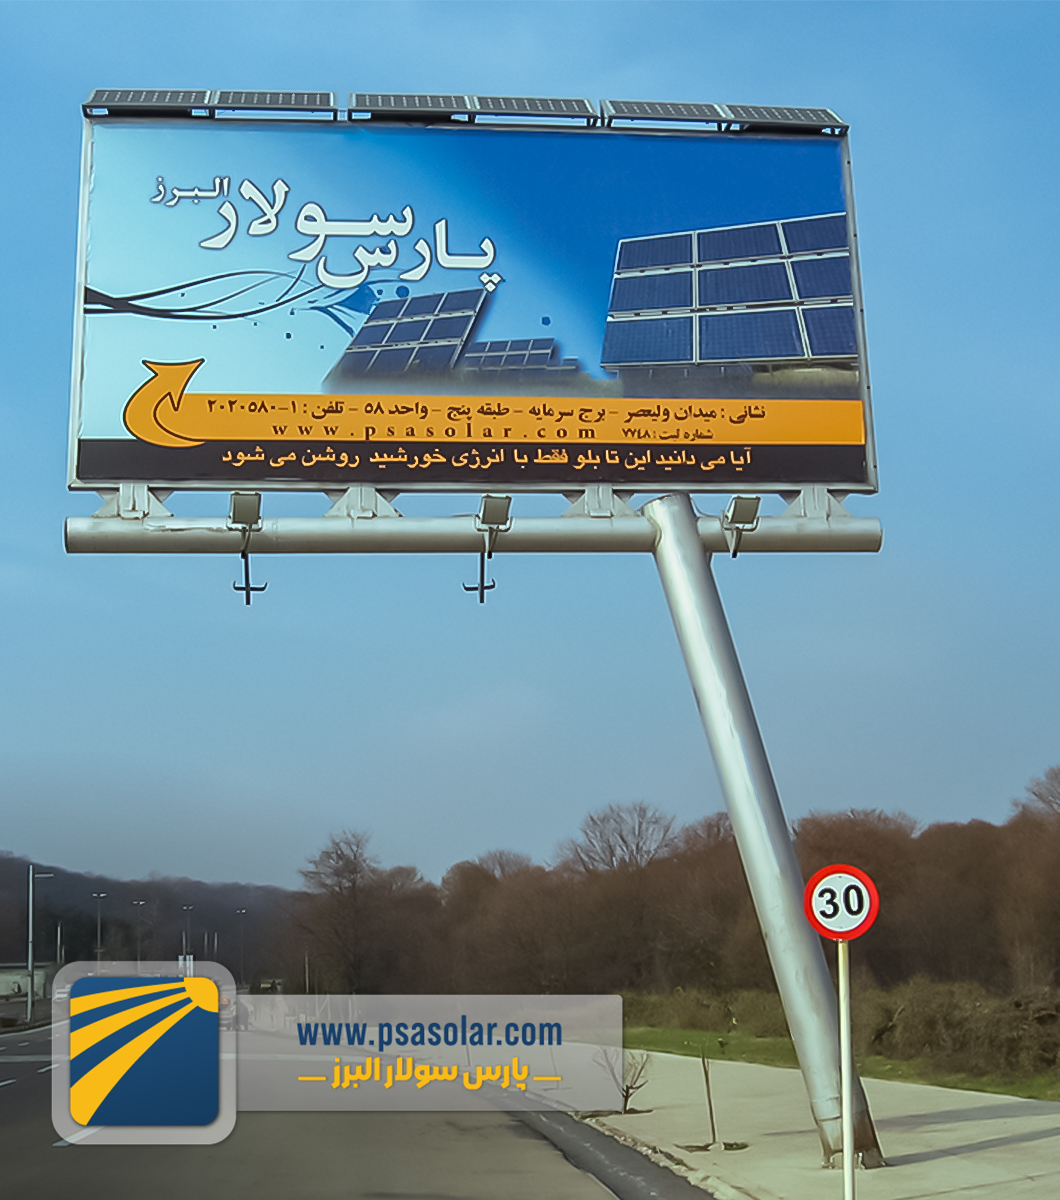 Design, supply and installation of the solar billboard